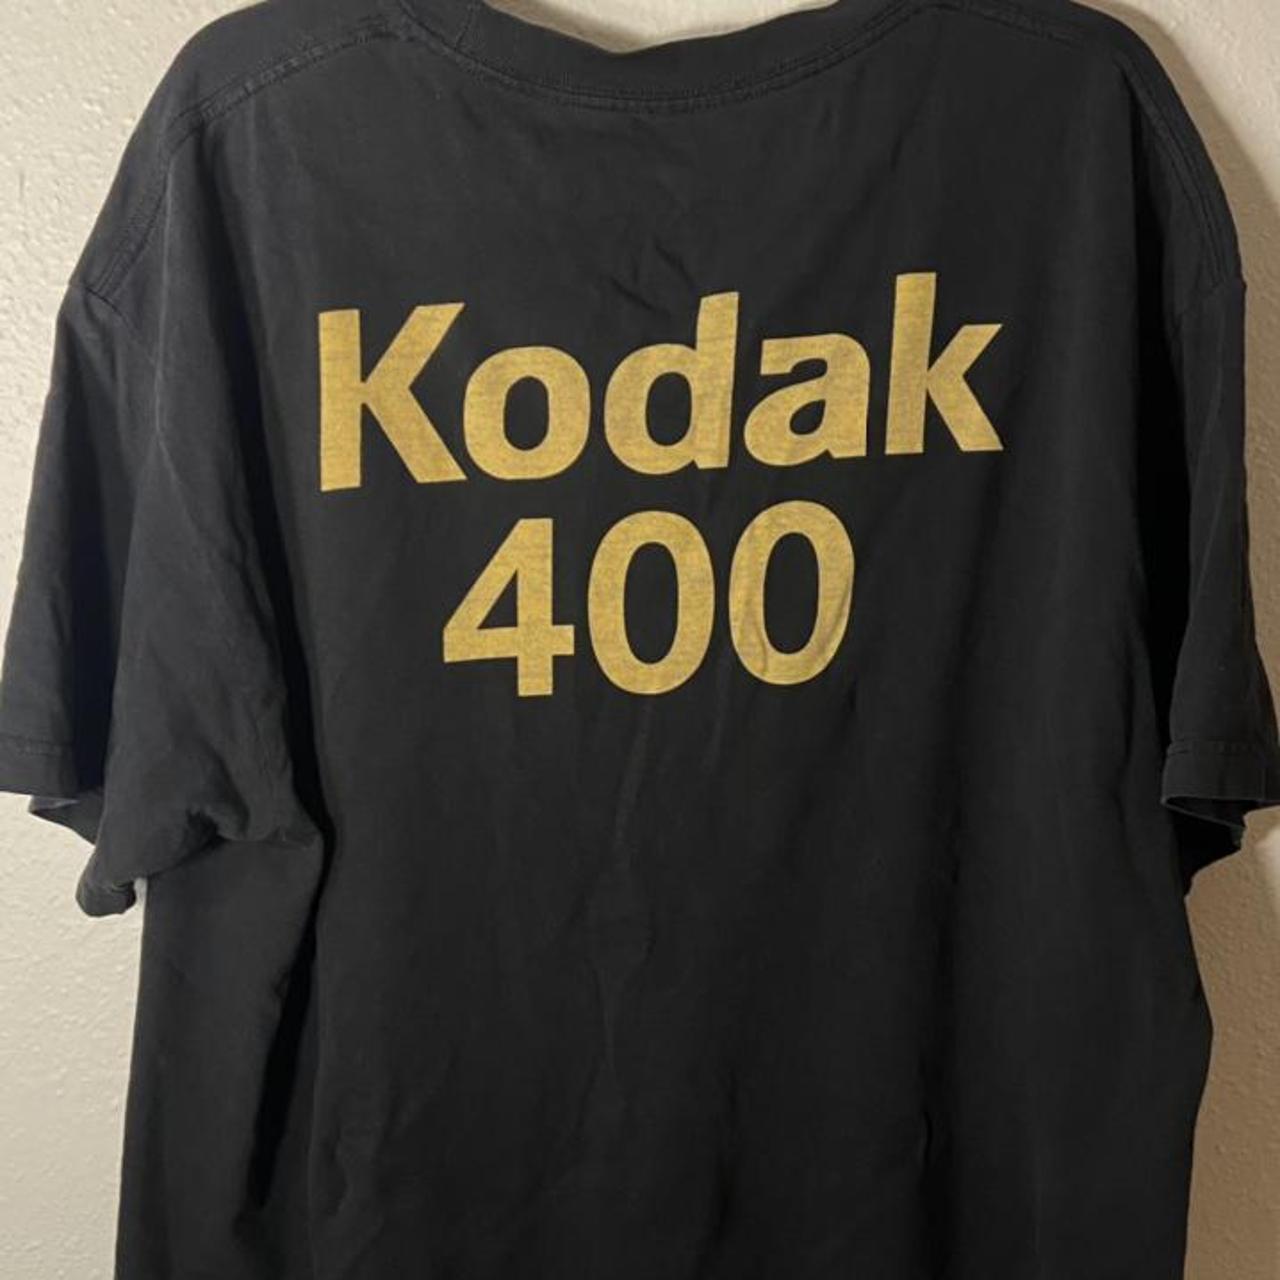 Kodak Men's Black and Yellow T-shirt (2)